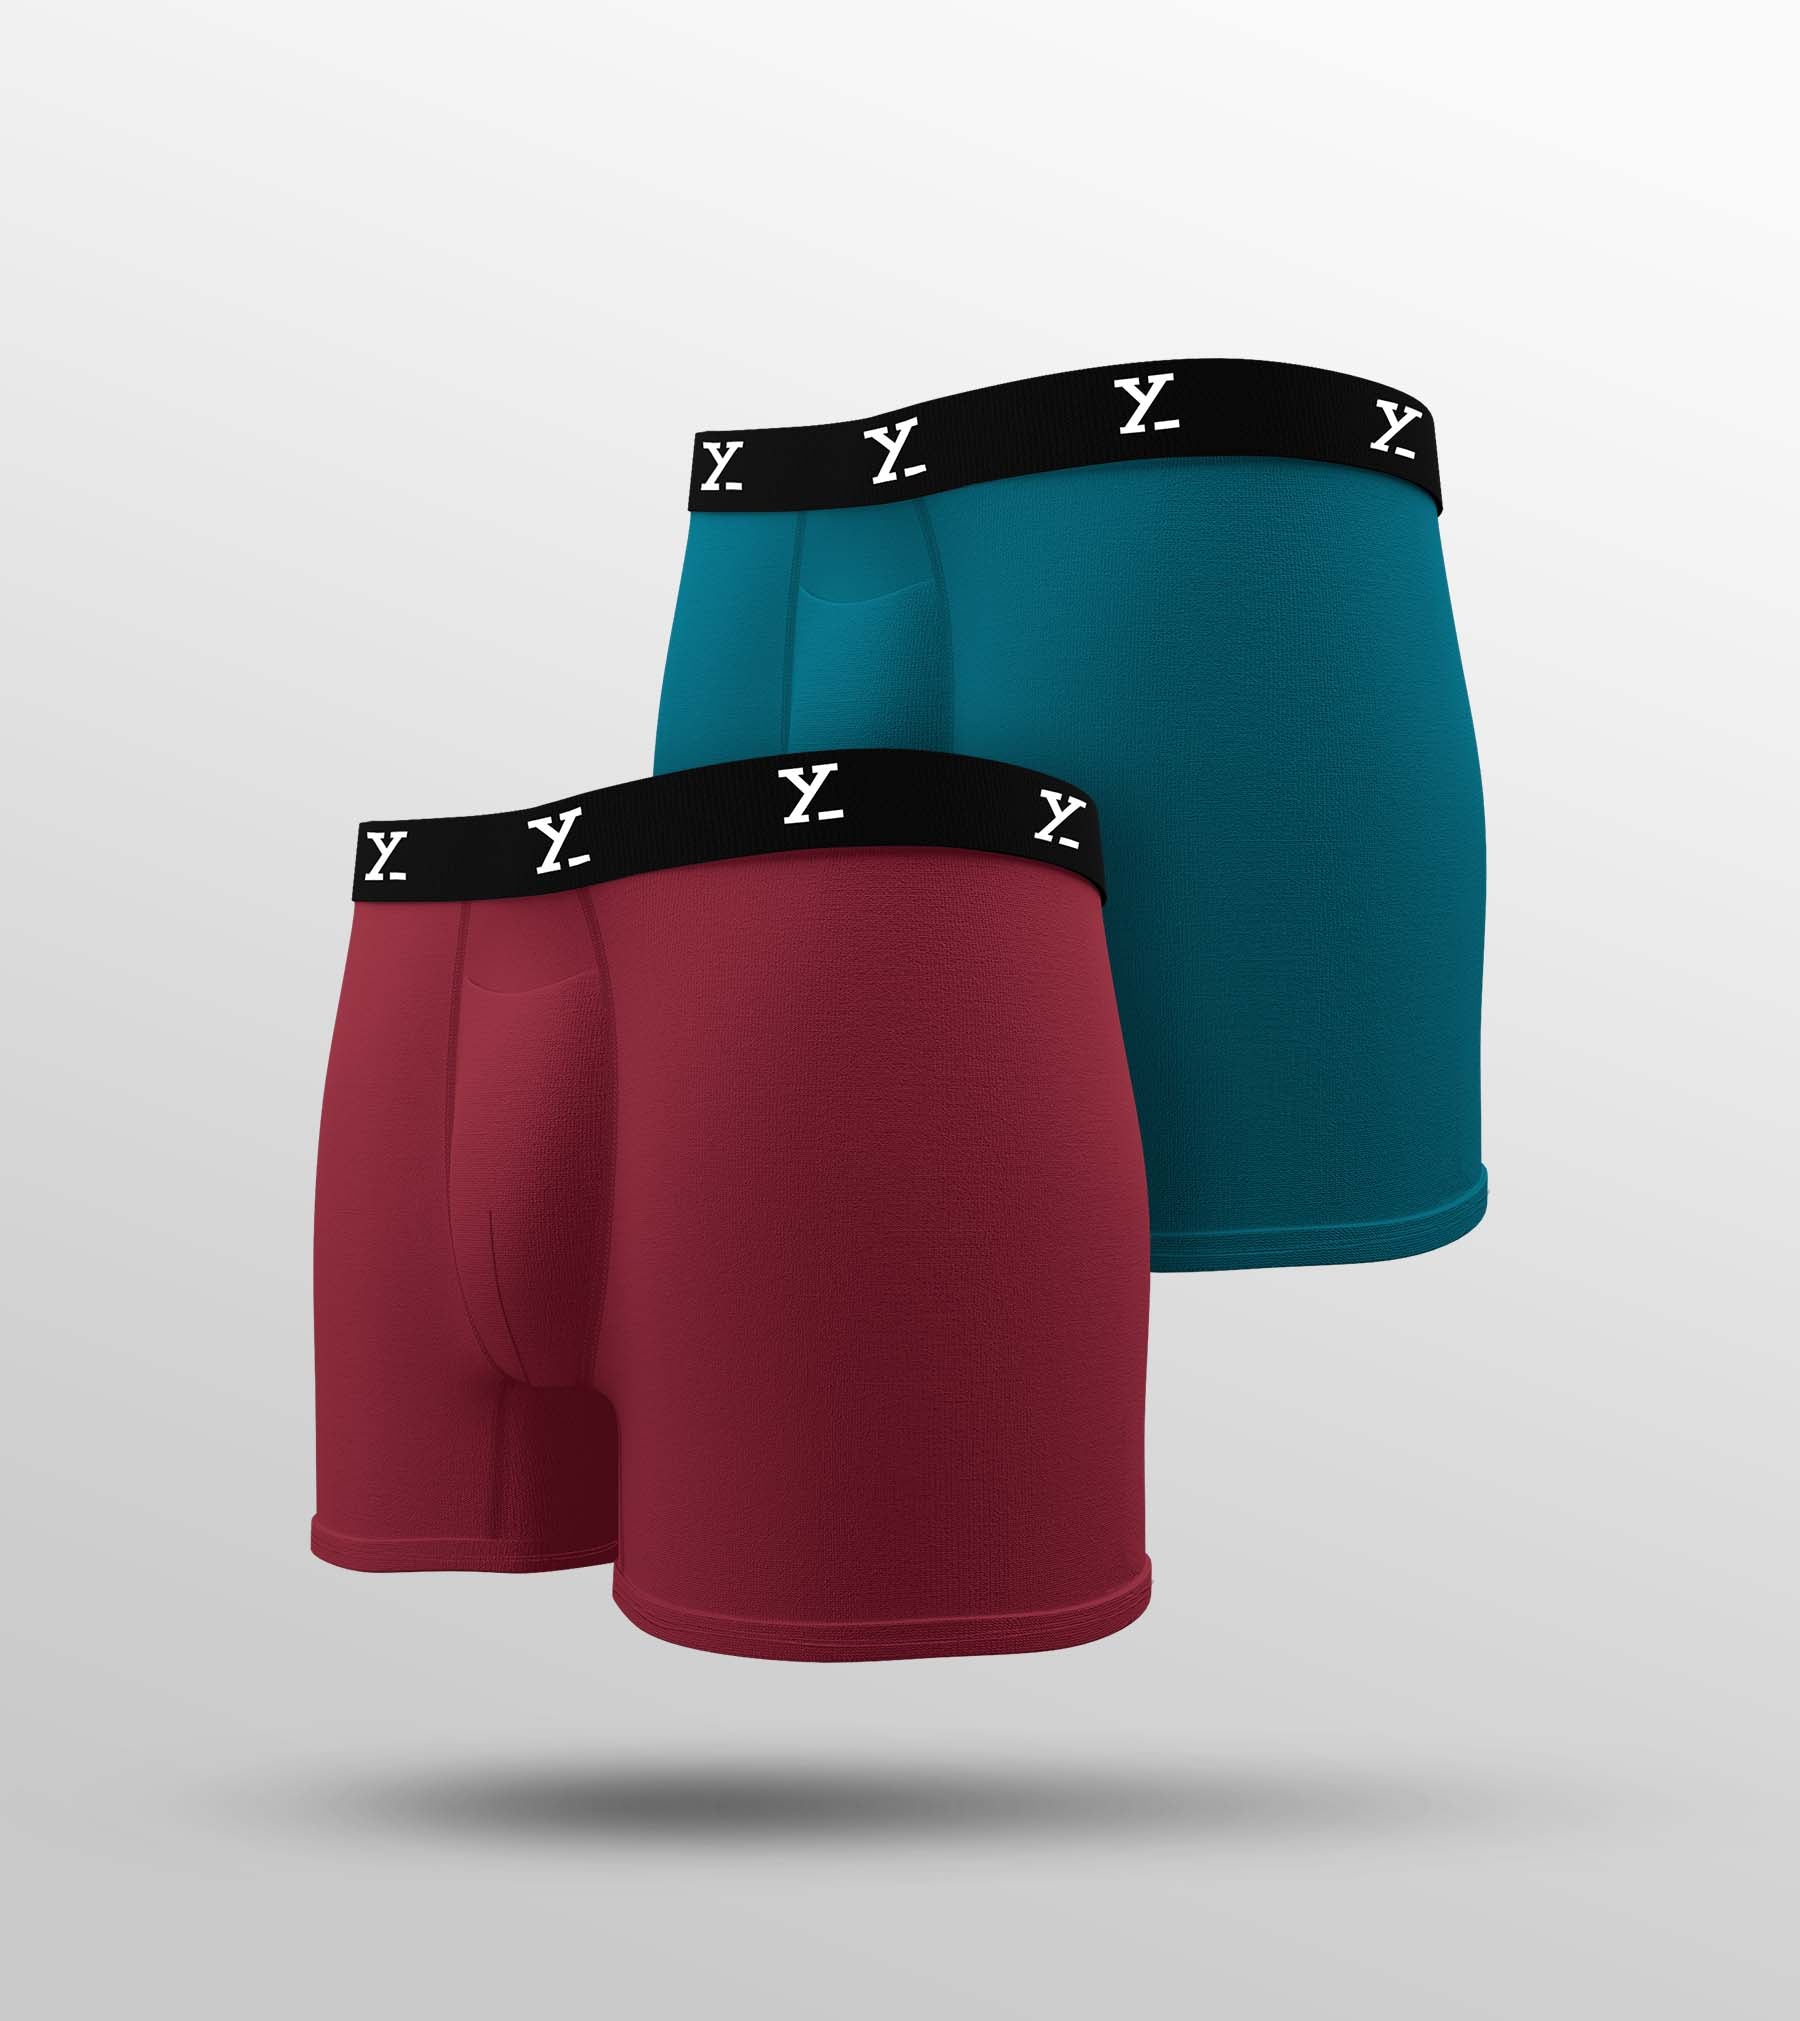 Ace Modal Boxer Briefs For Men Pack of 2(Aqua Blue, Red) -  XYXX Mens Apparels